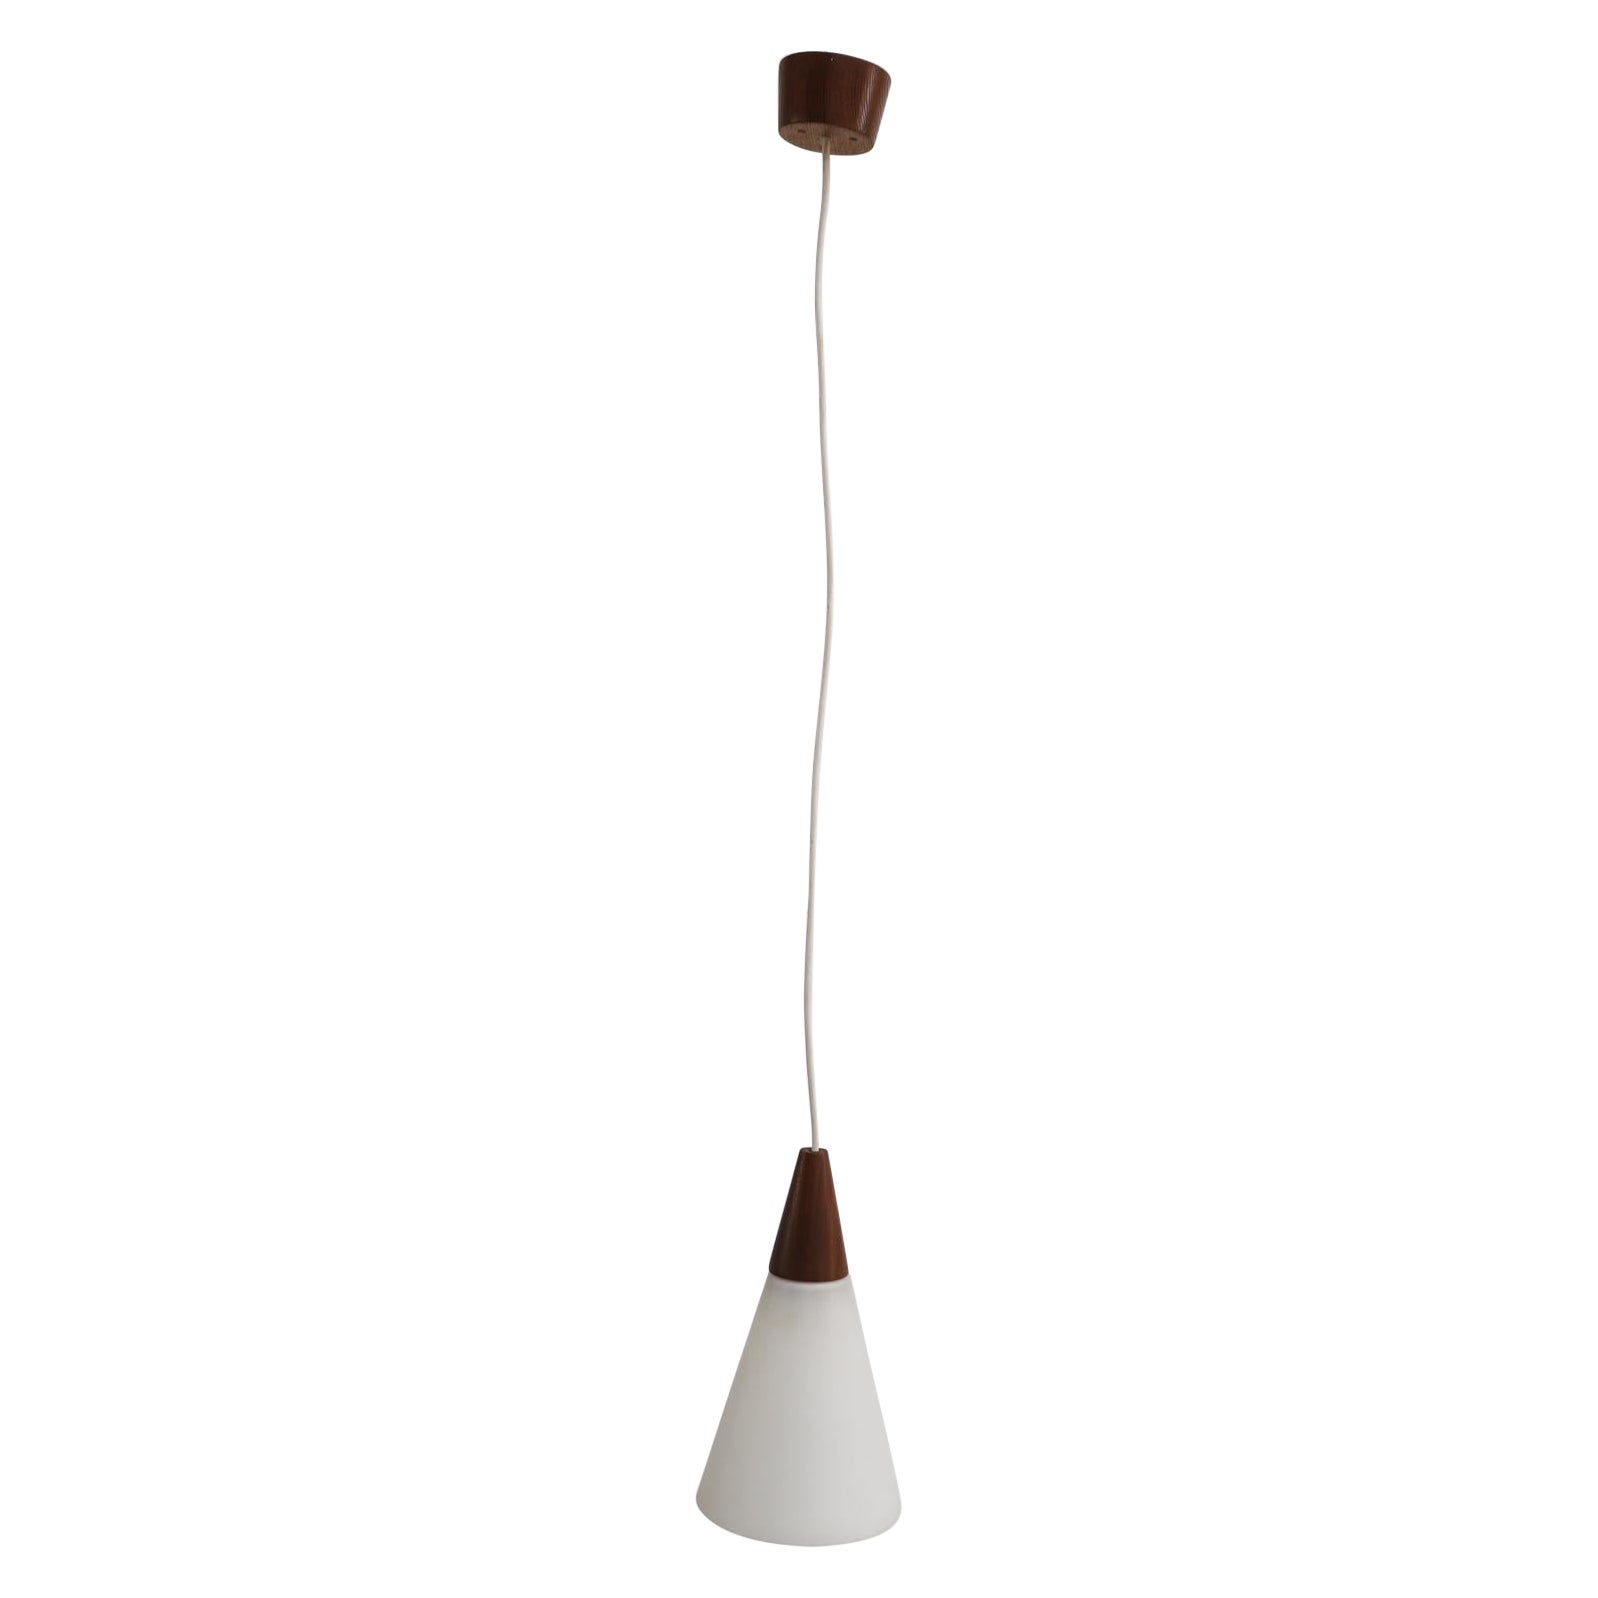 Midcentury Danish Teak and Milk Glass Cone Pendant Light with Teak Canopy For Sale